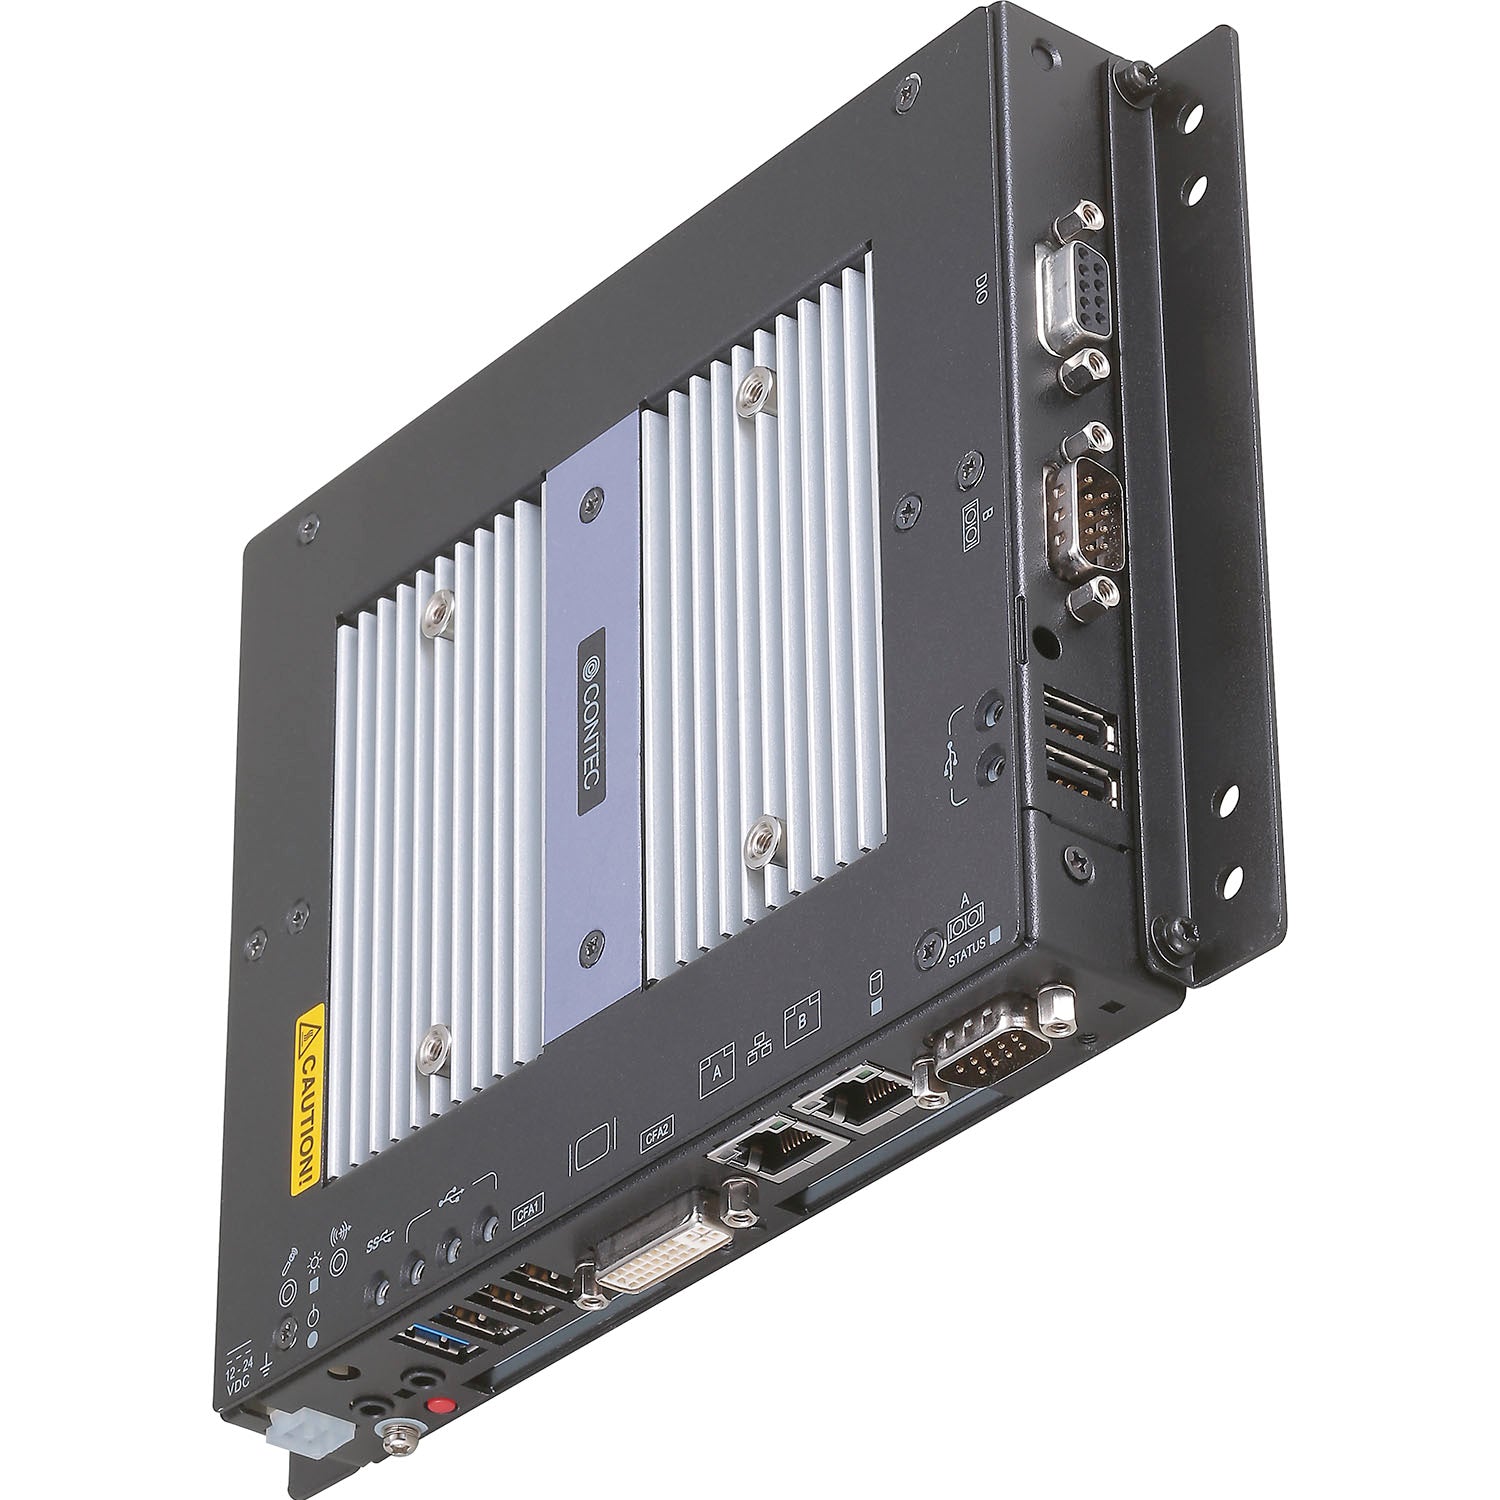 BX-956S - Fanless Embedded PC / Intel Atom E3845 (Bay Trail) / 12-24VDC Input / 0-60C Operation